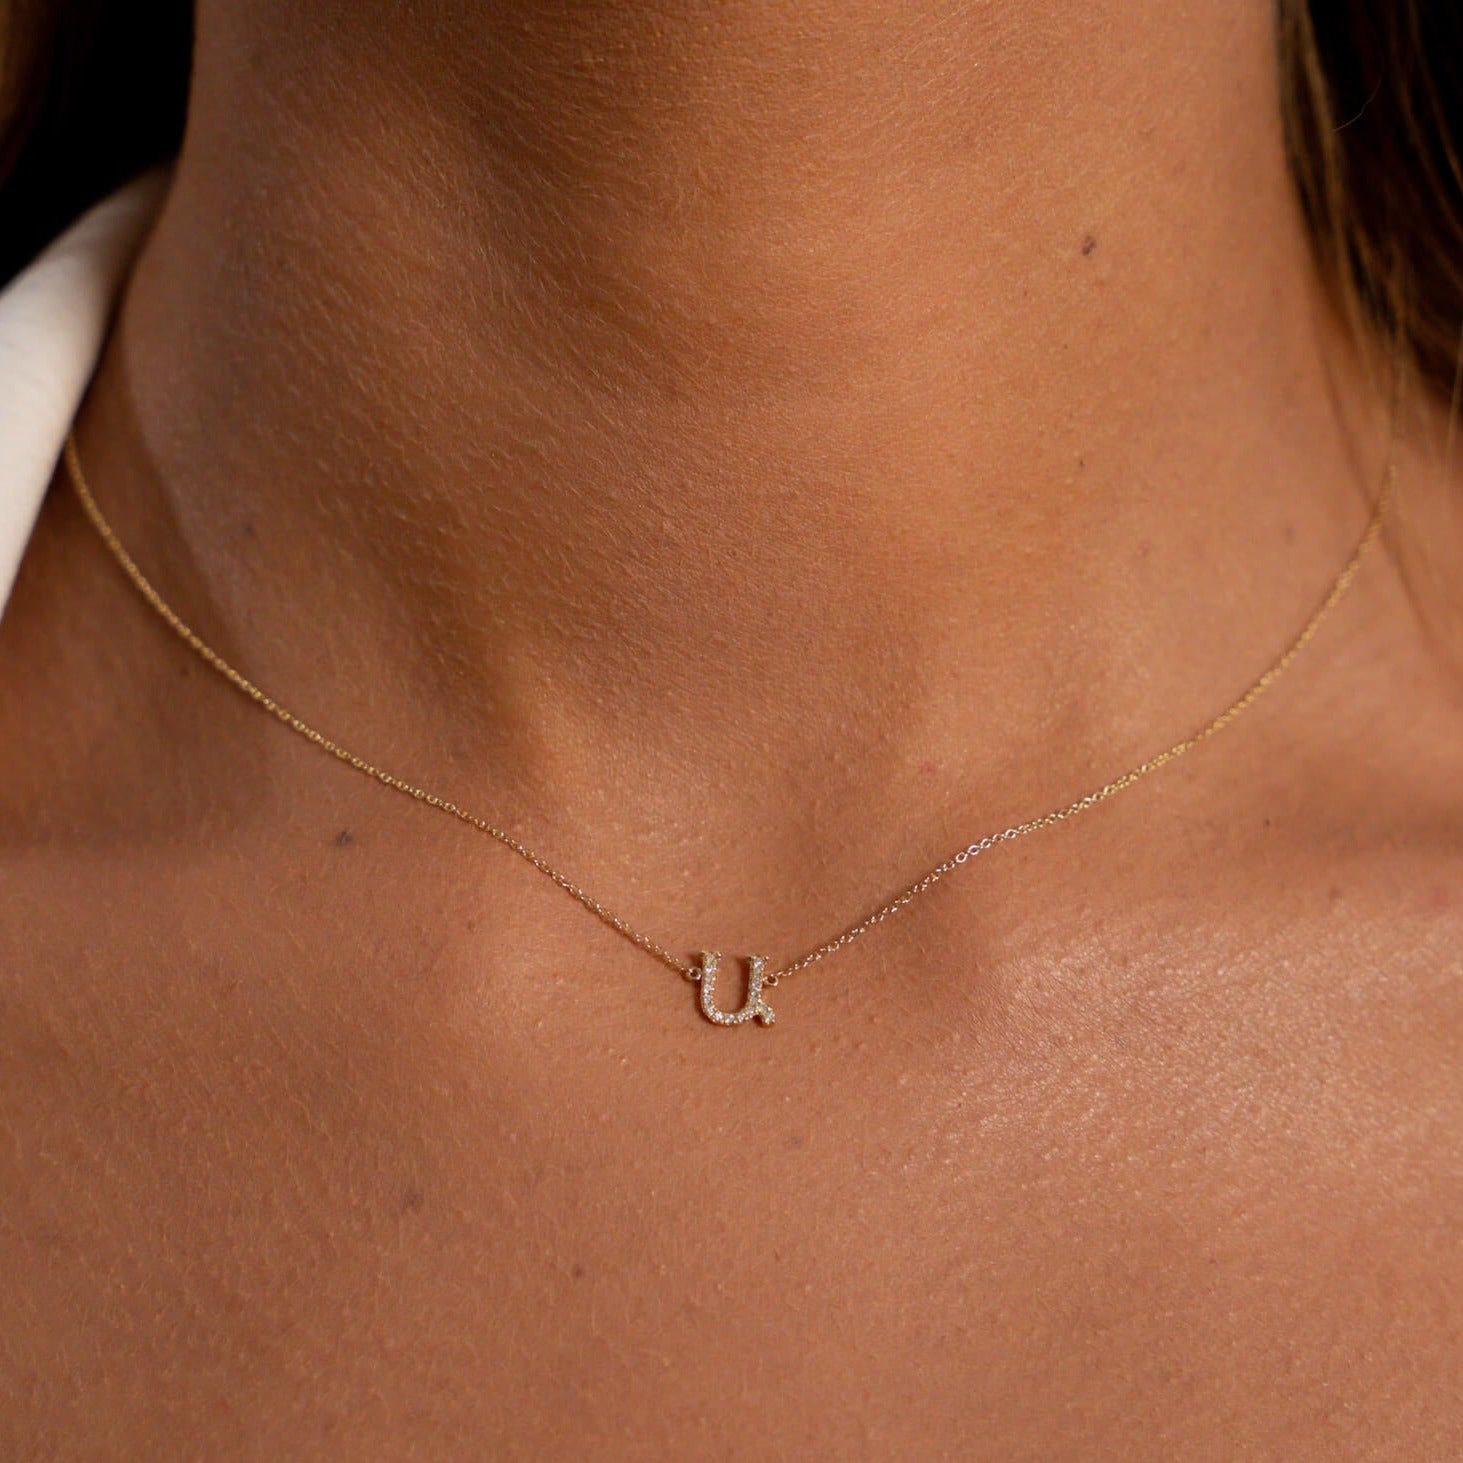 14K Diamond Armenian Initial Necklace Necklaces IceLink-CAL Ա (Ani)  